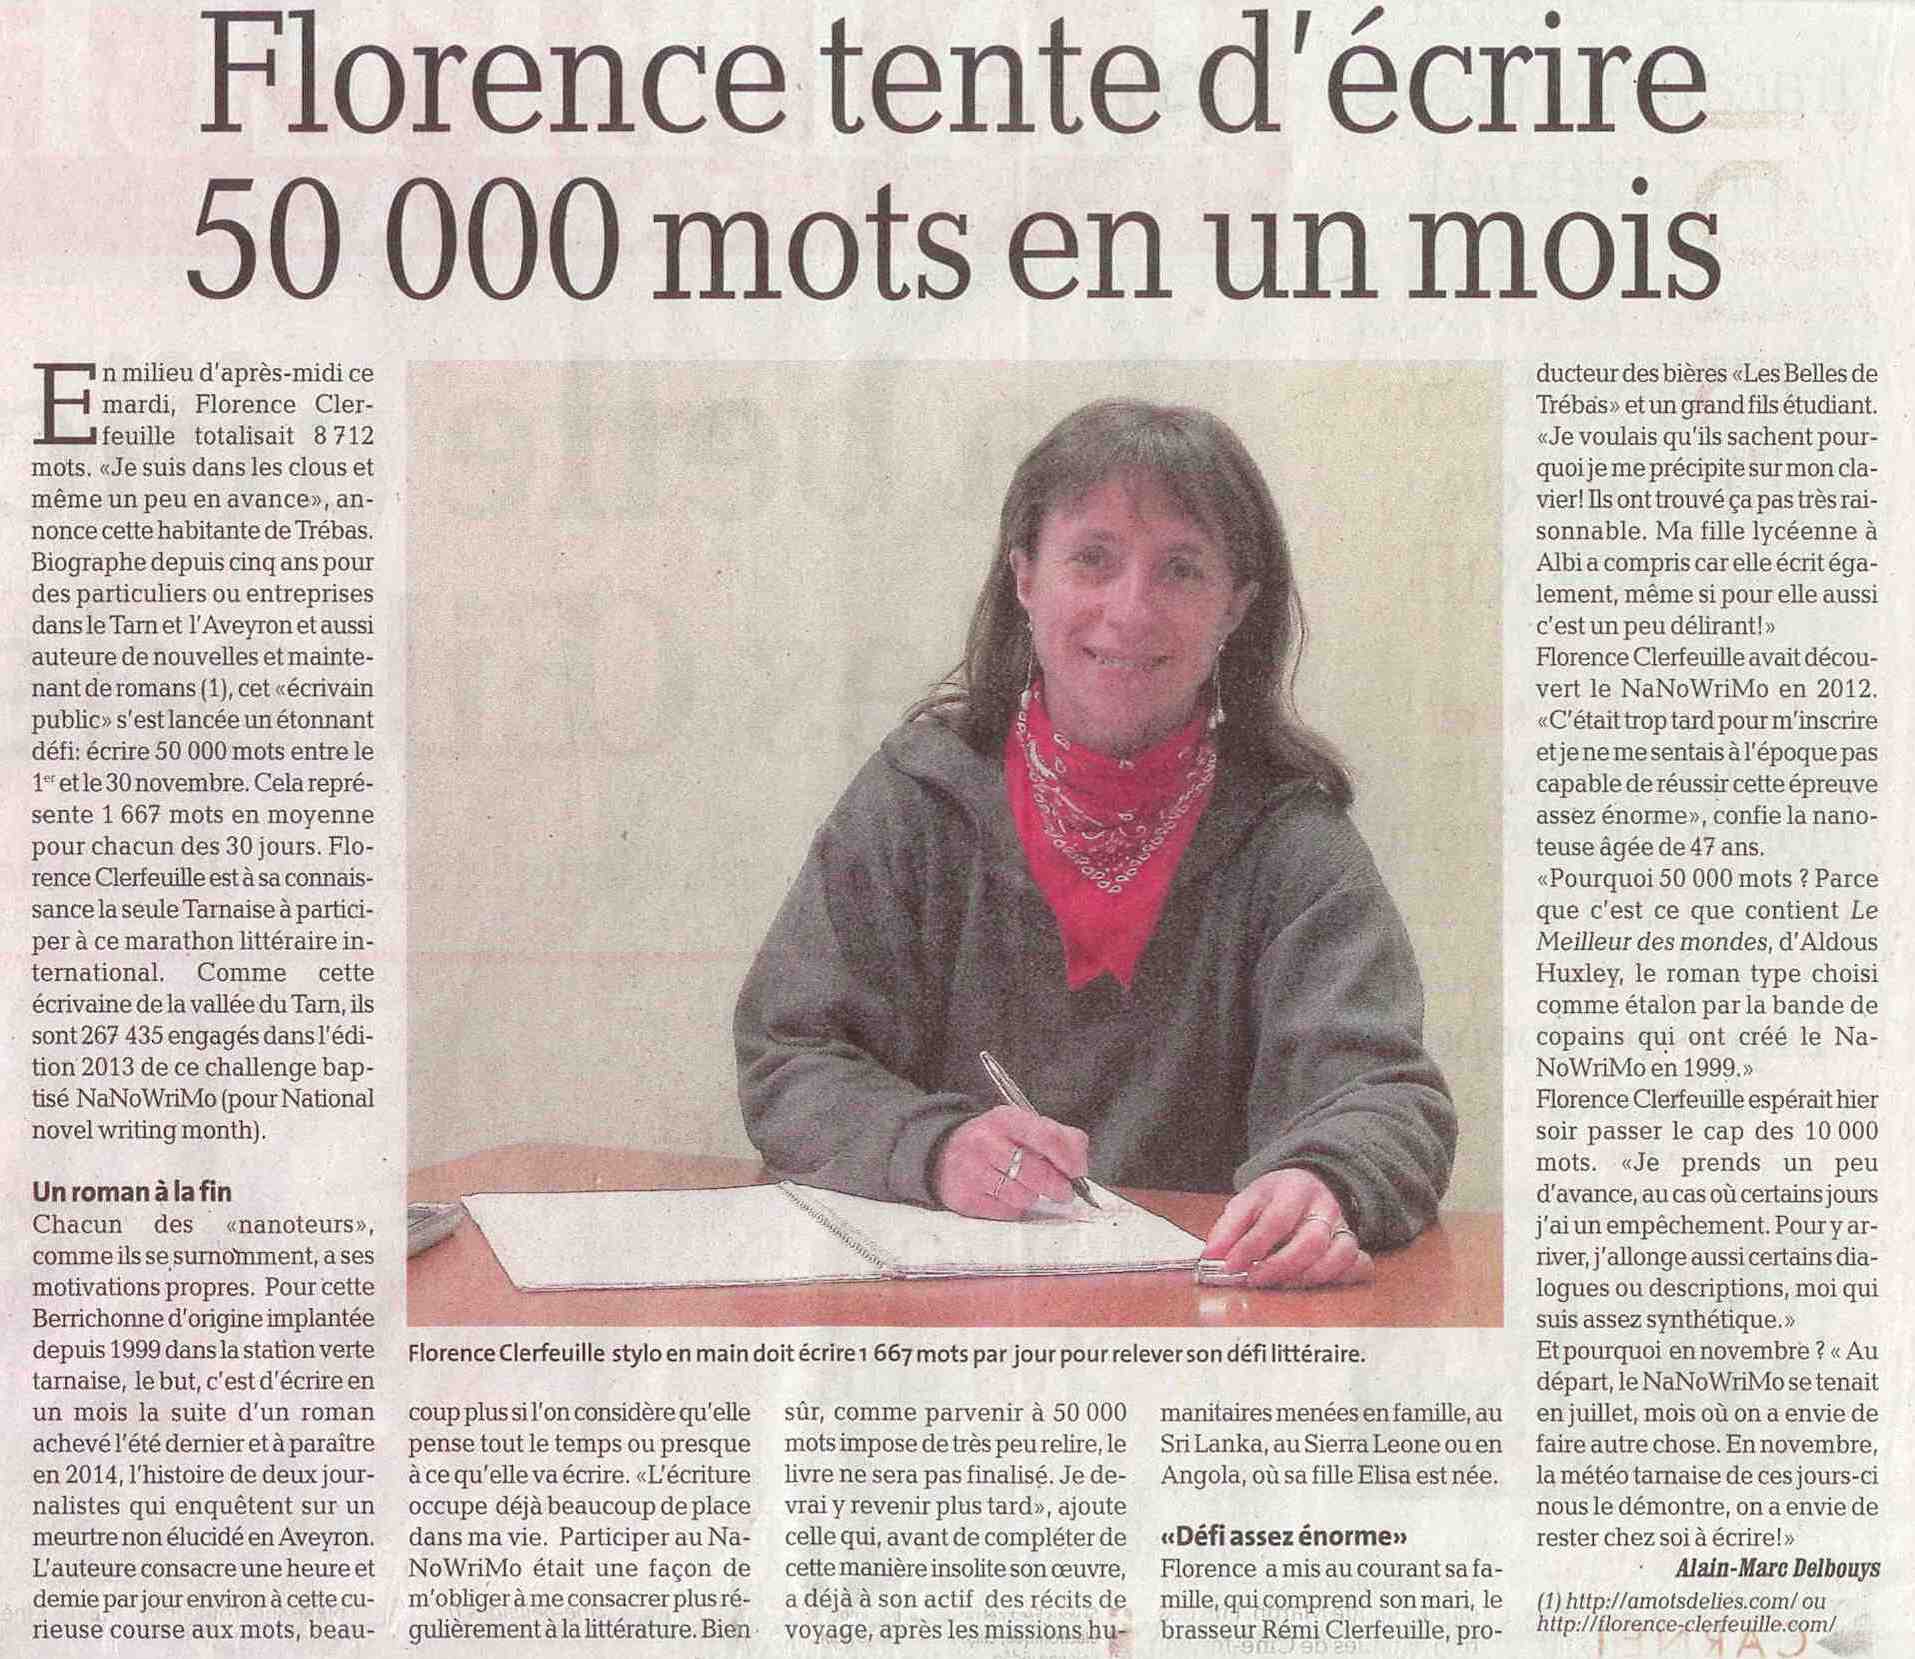 La Dépêche du Midi, mercredi 6 novembre 2013